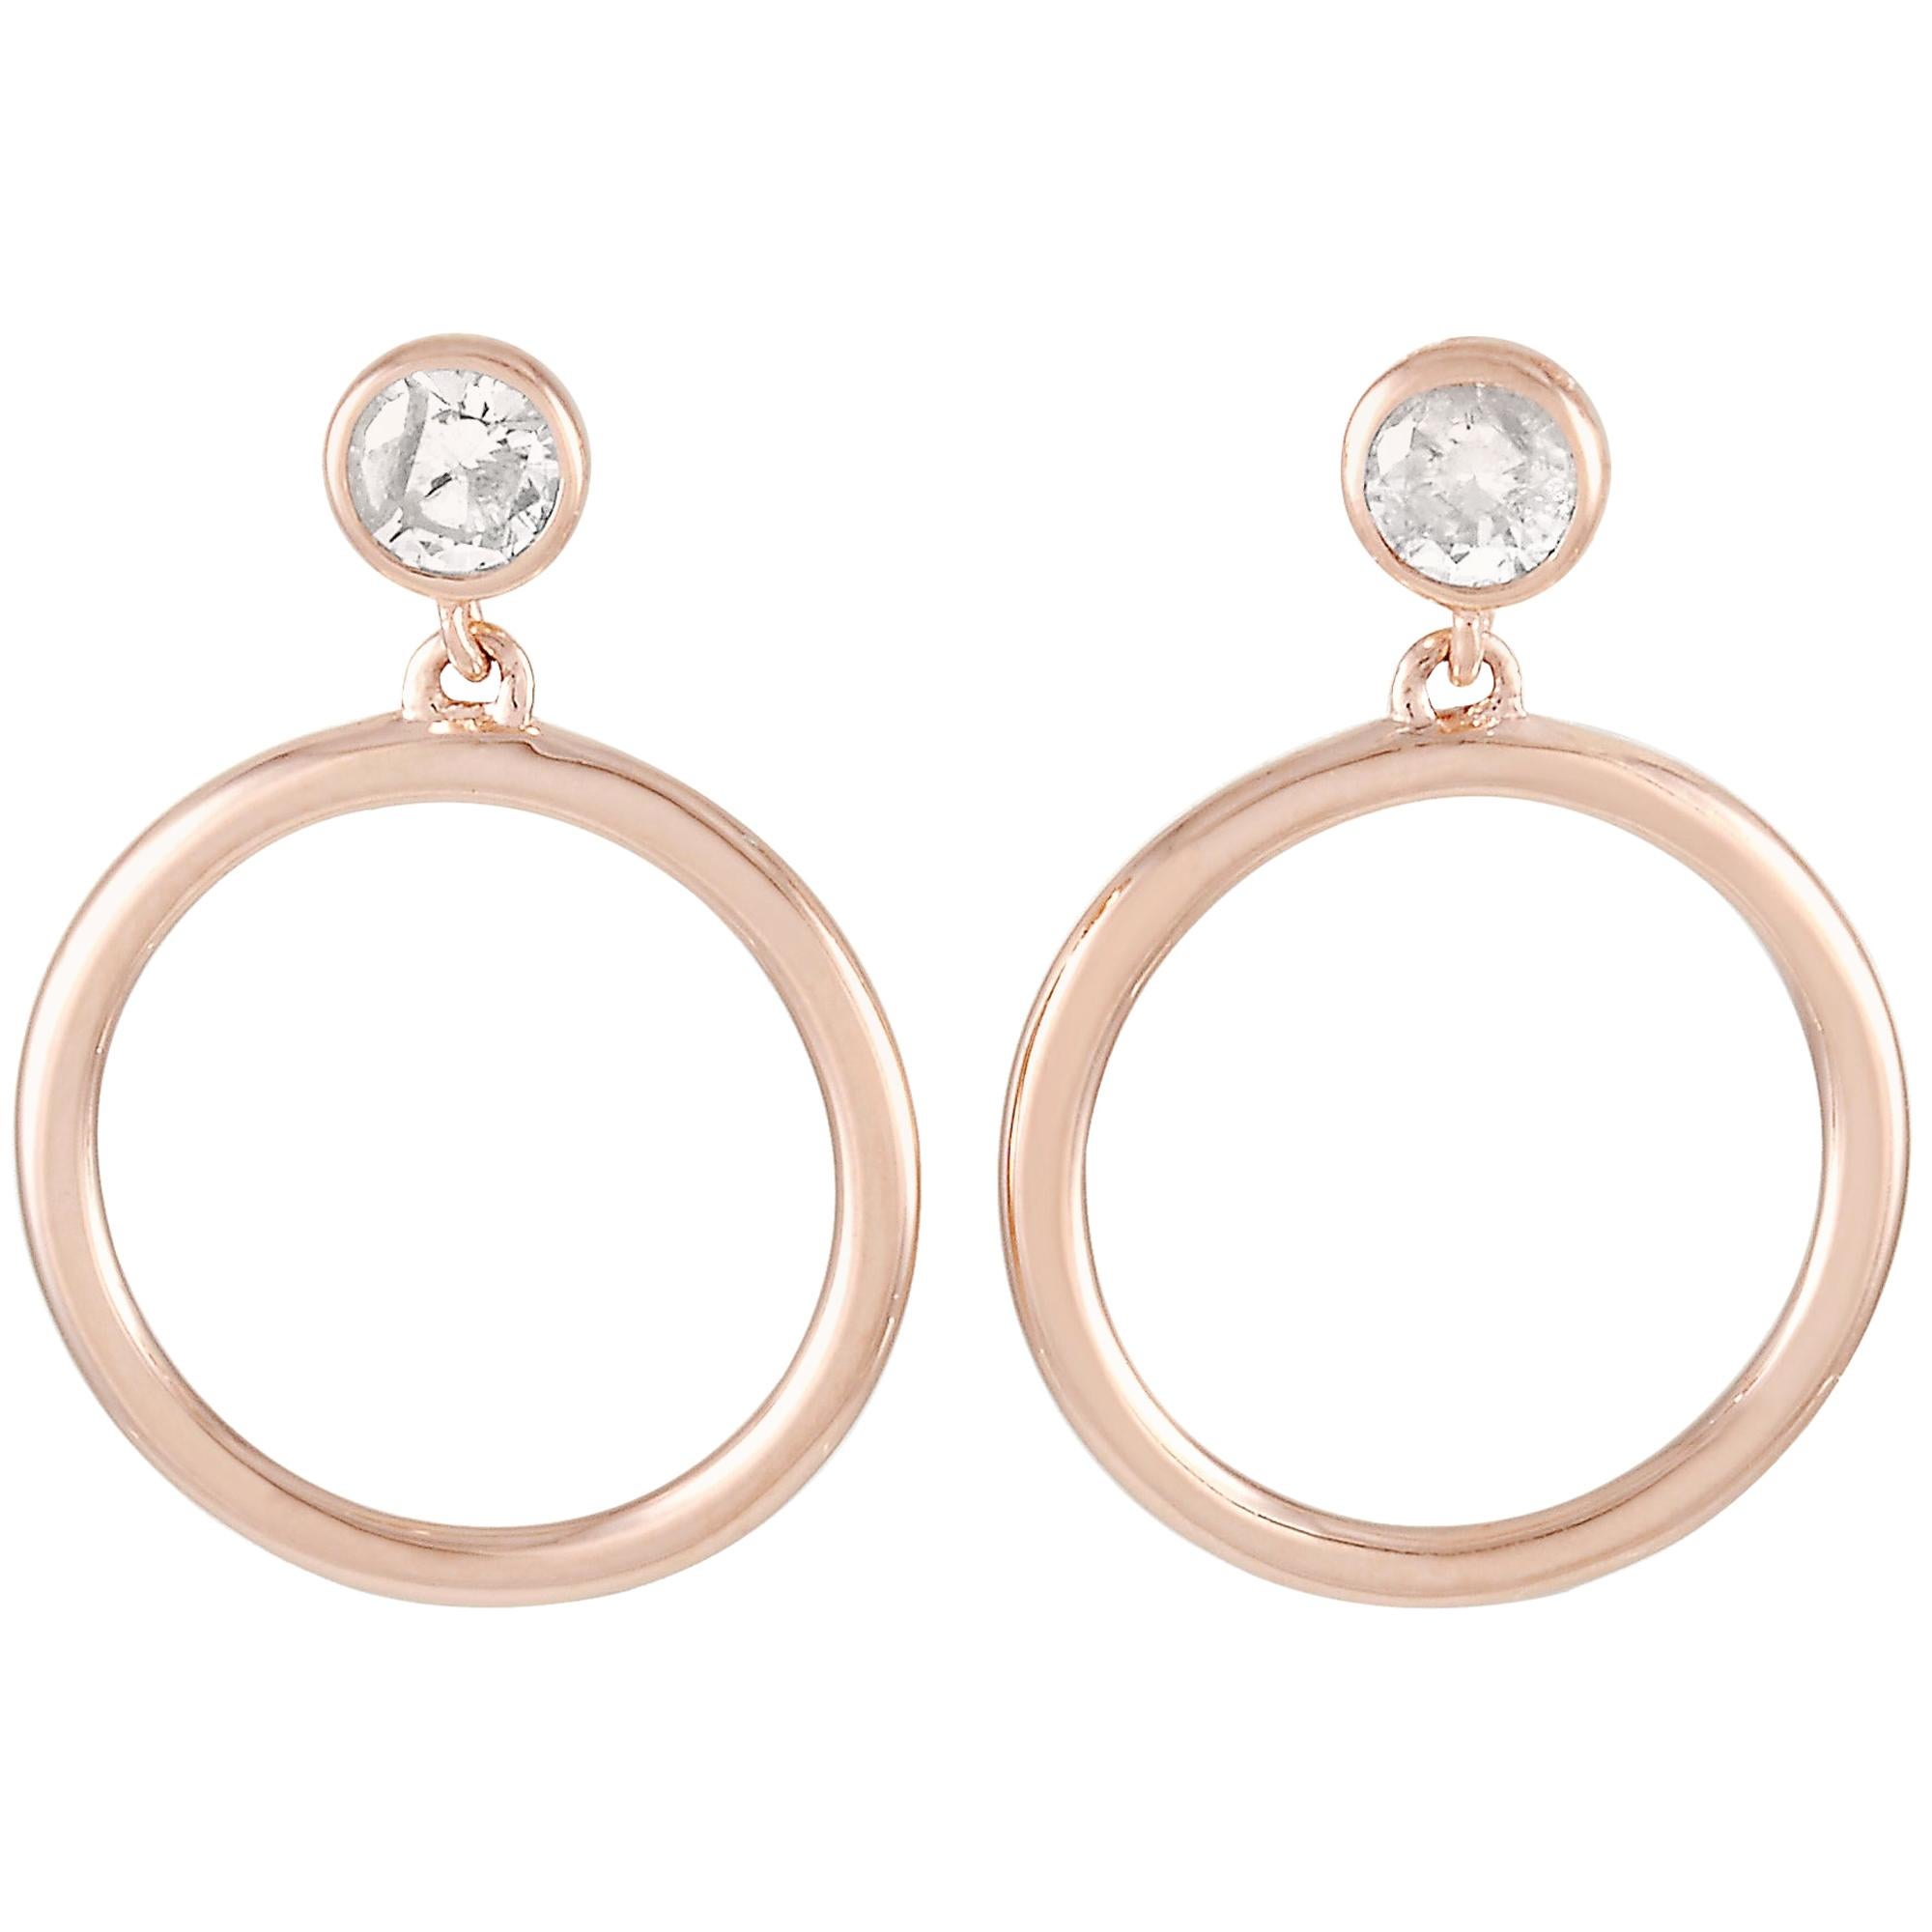 LB Exclusive 14 Karat Rose Gold 0.18 Carat Diamond Earrings For Sale